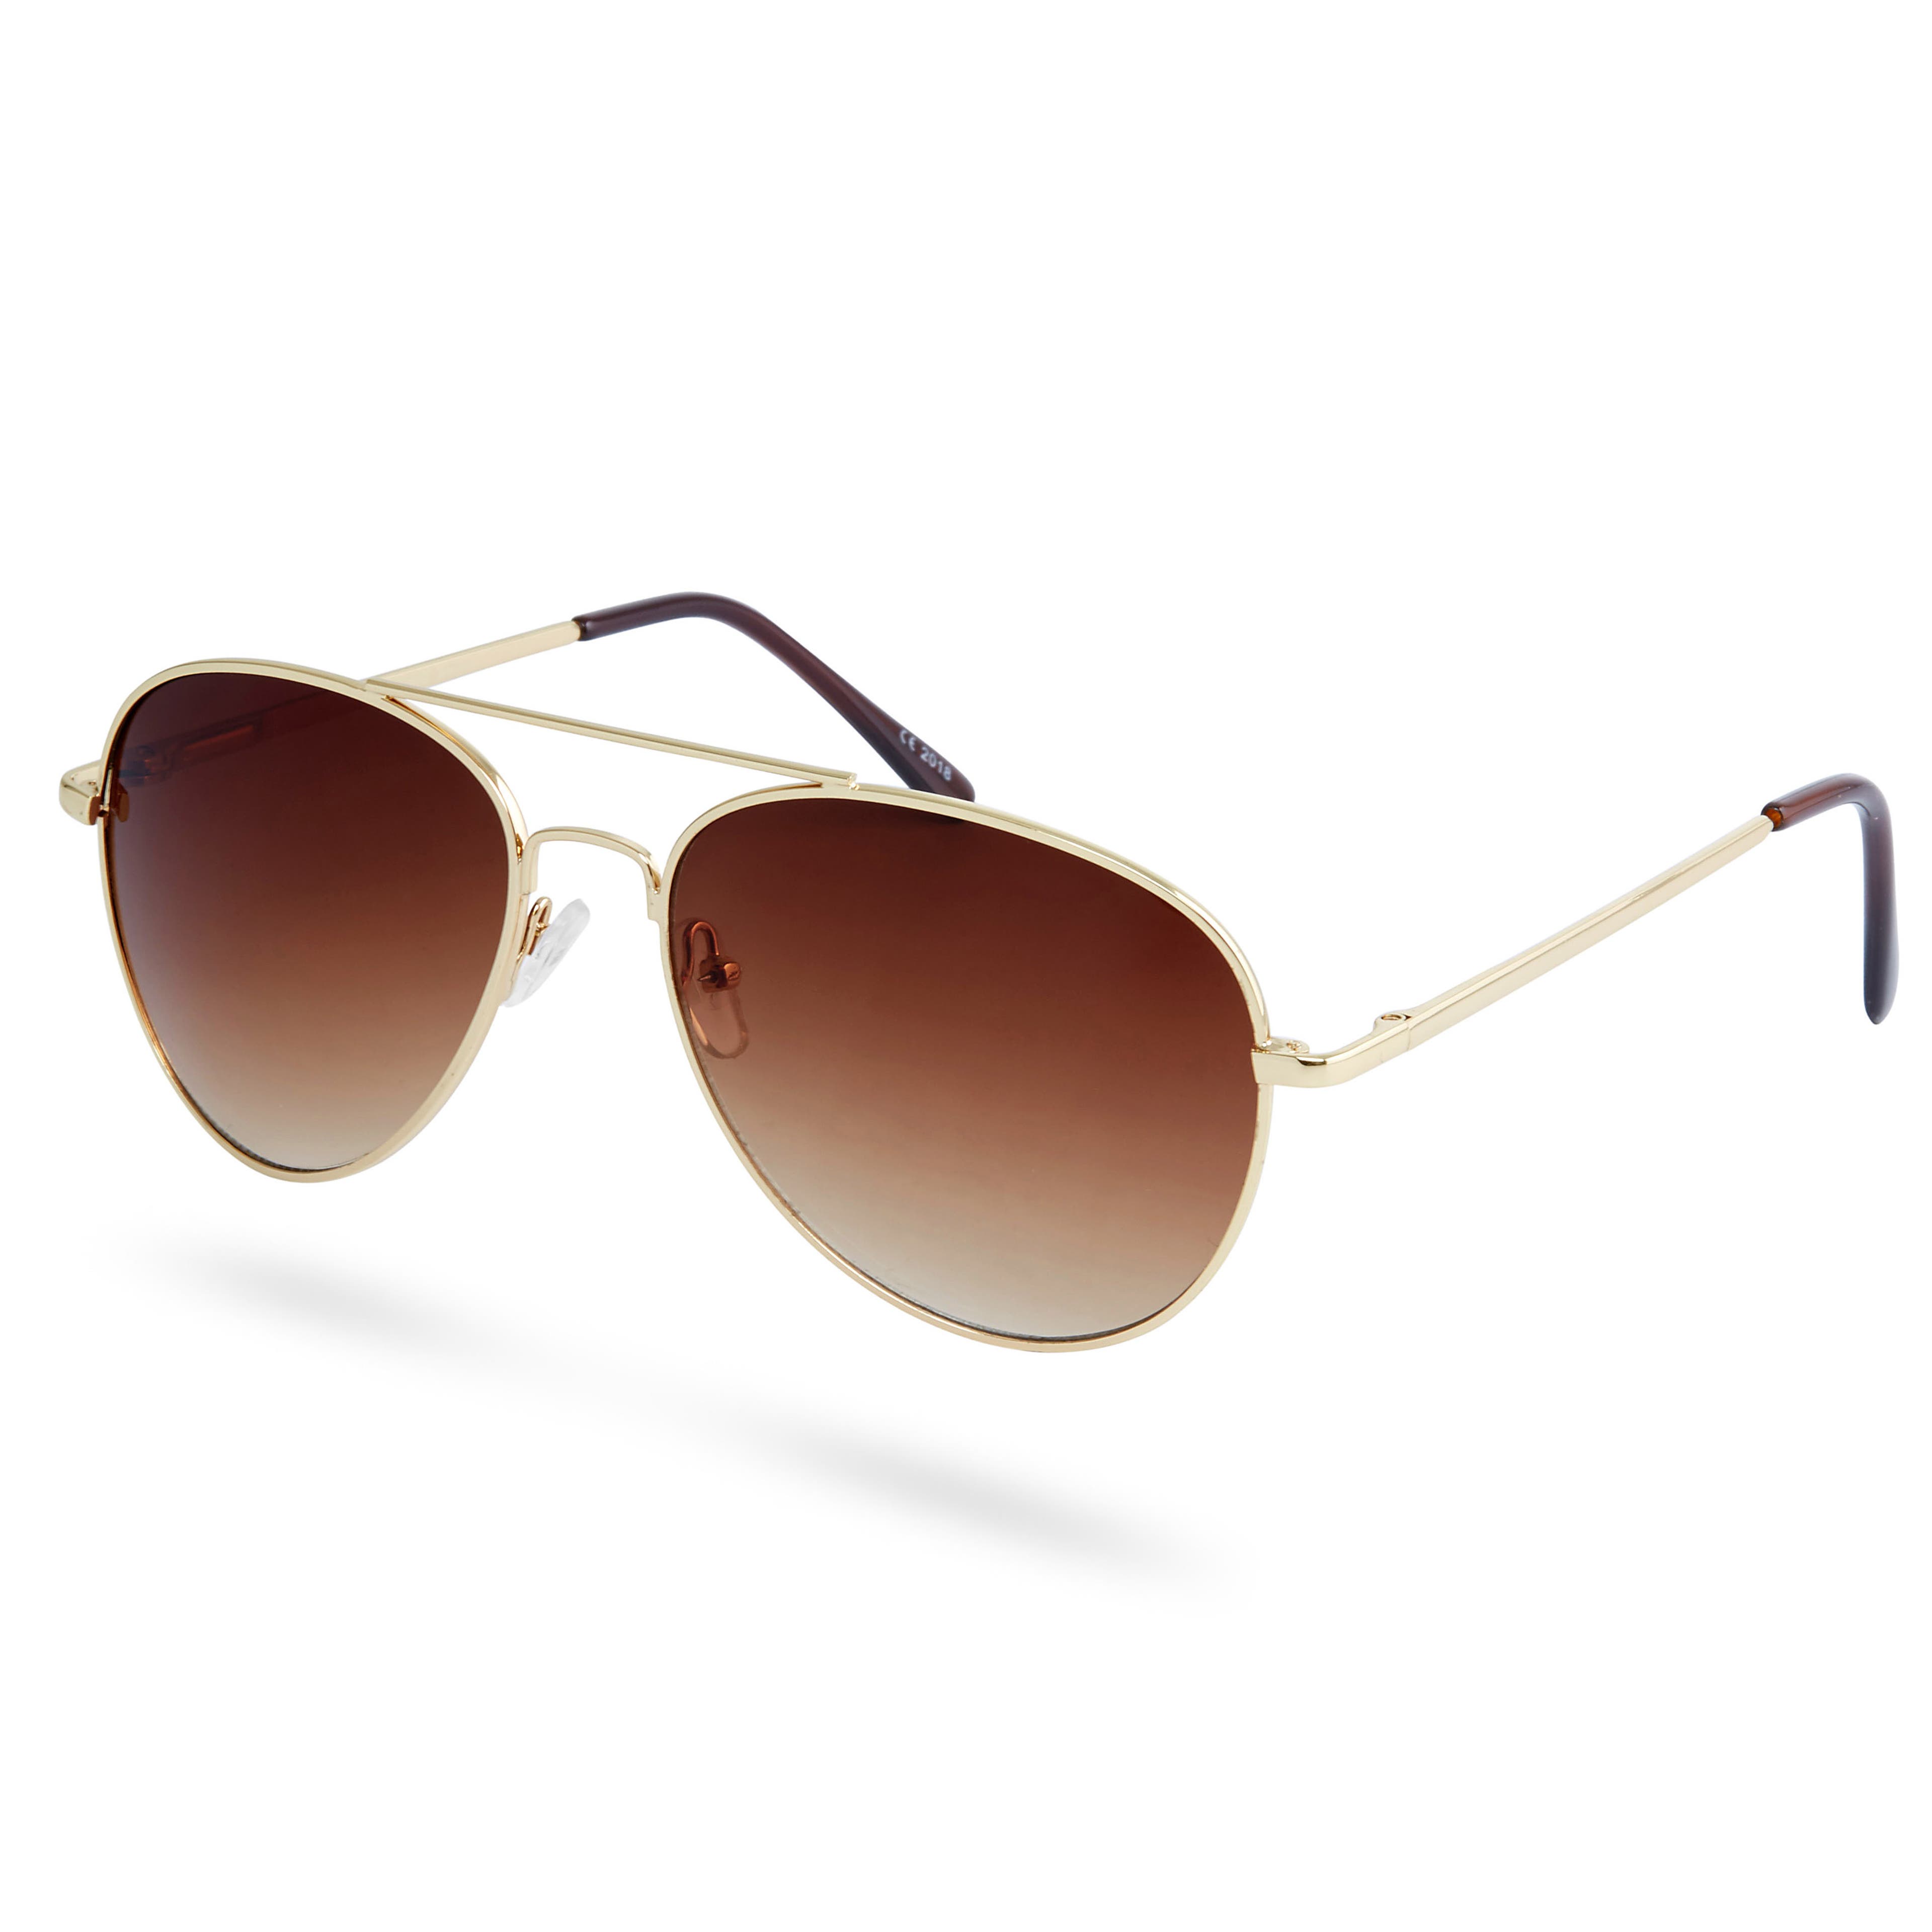 Gold-Tone & Terracotta Aviator Sunglasses